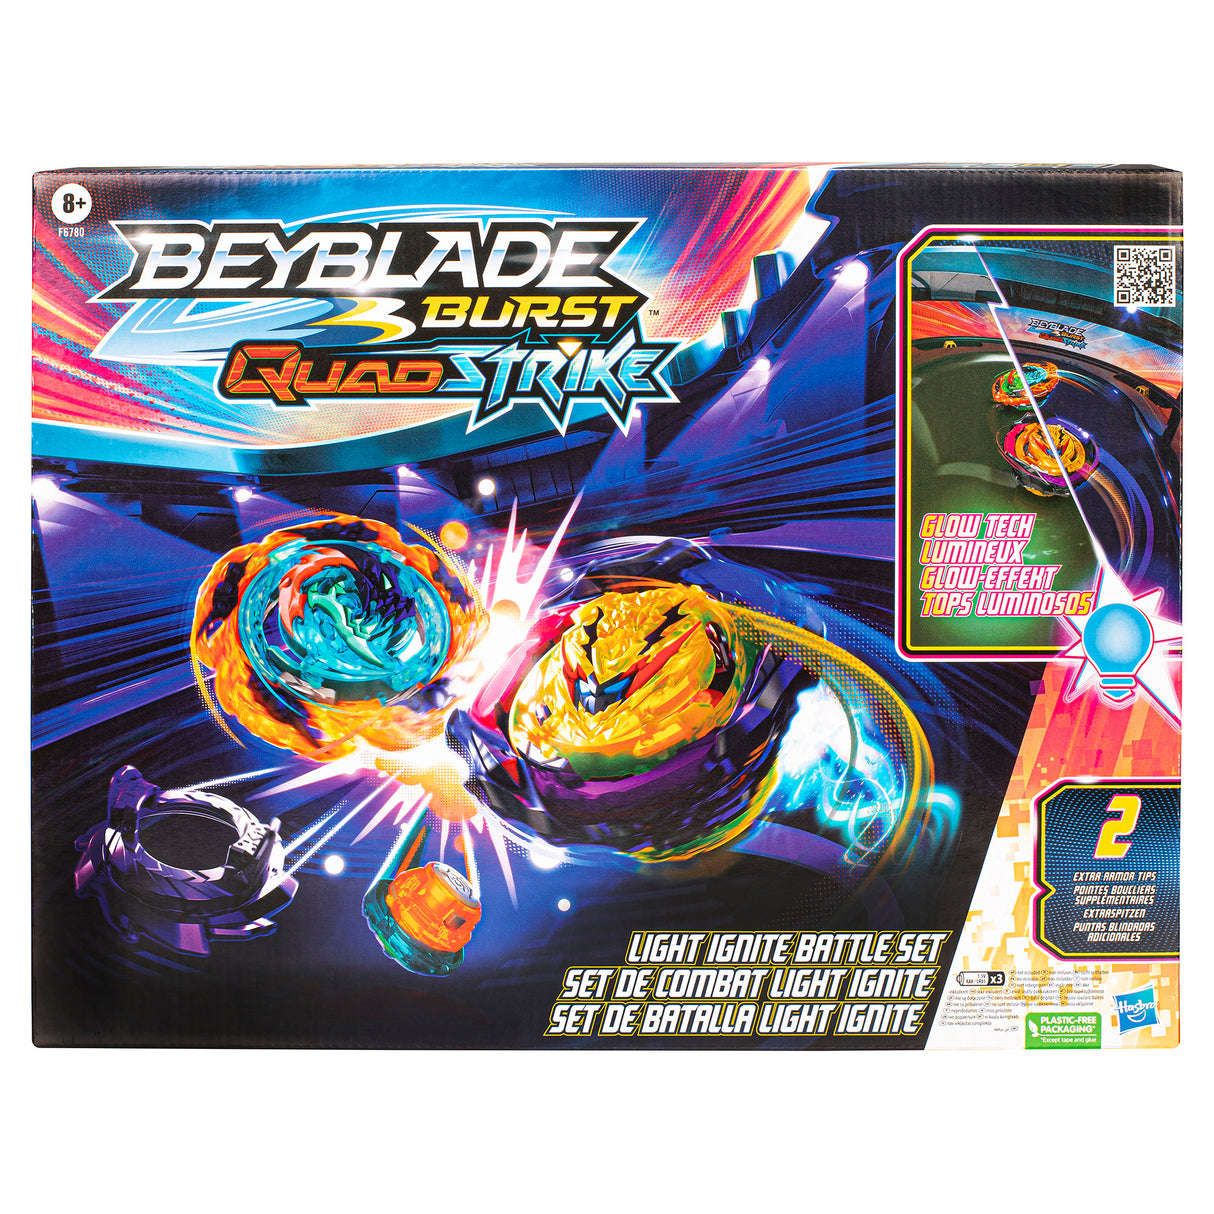 Beyblade Quadstrike Light Ignite Battle Set